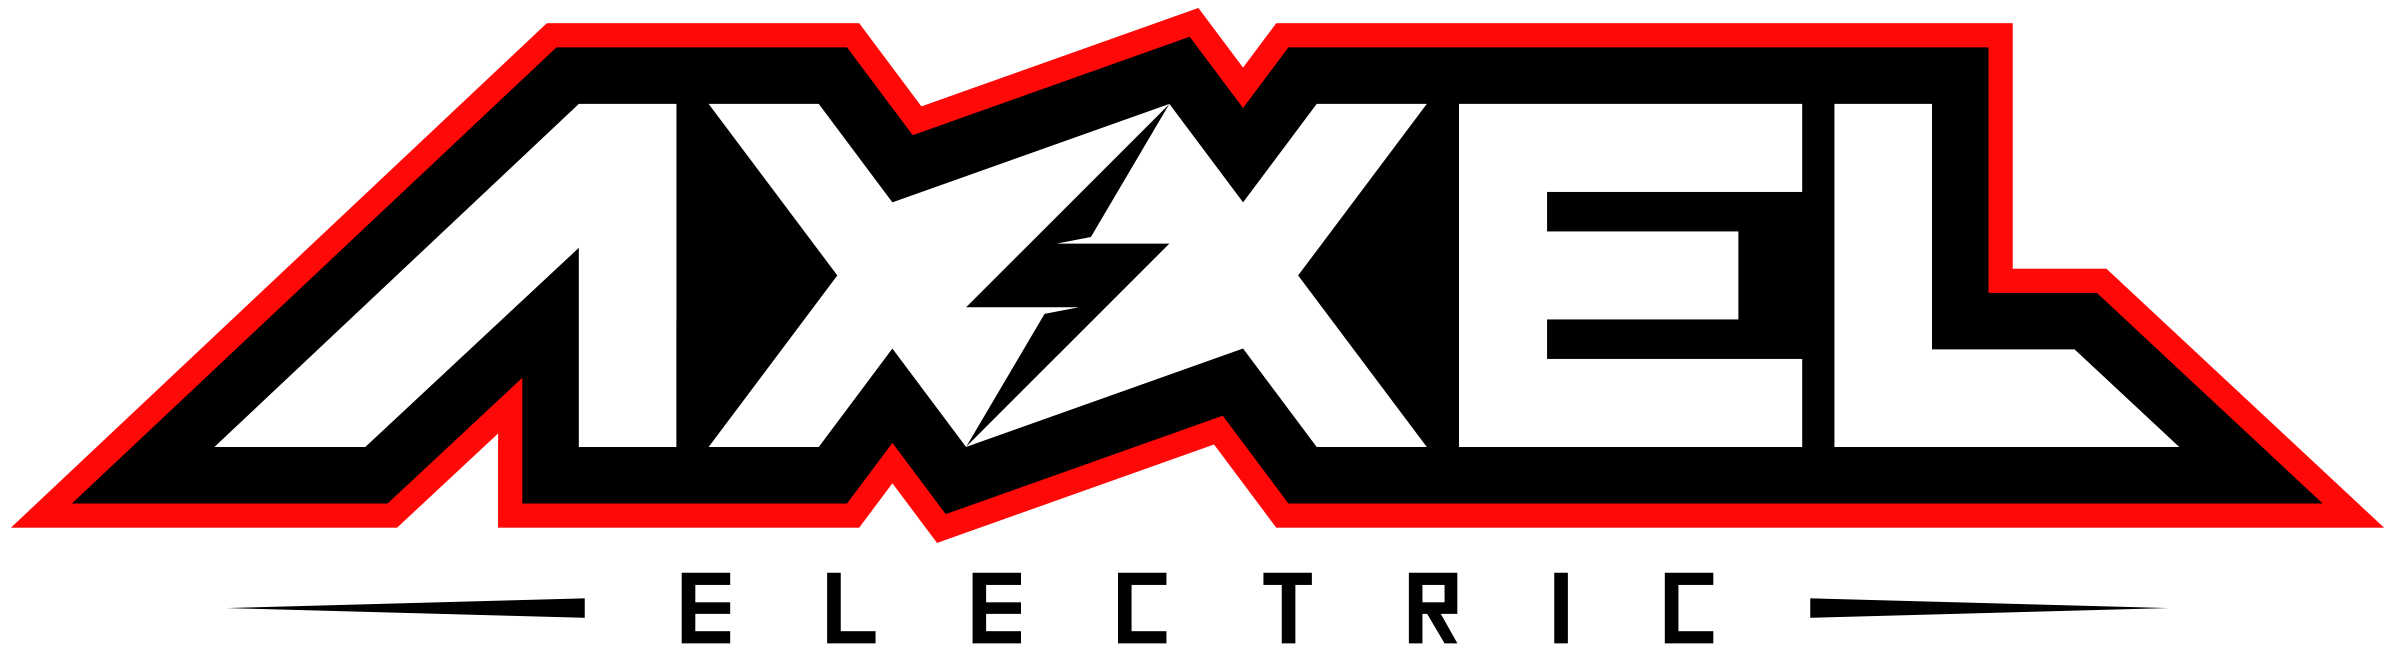 Axxel Electric